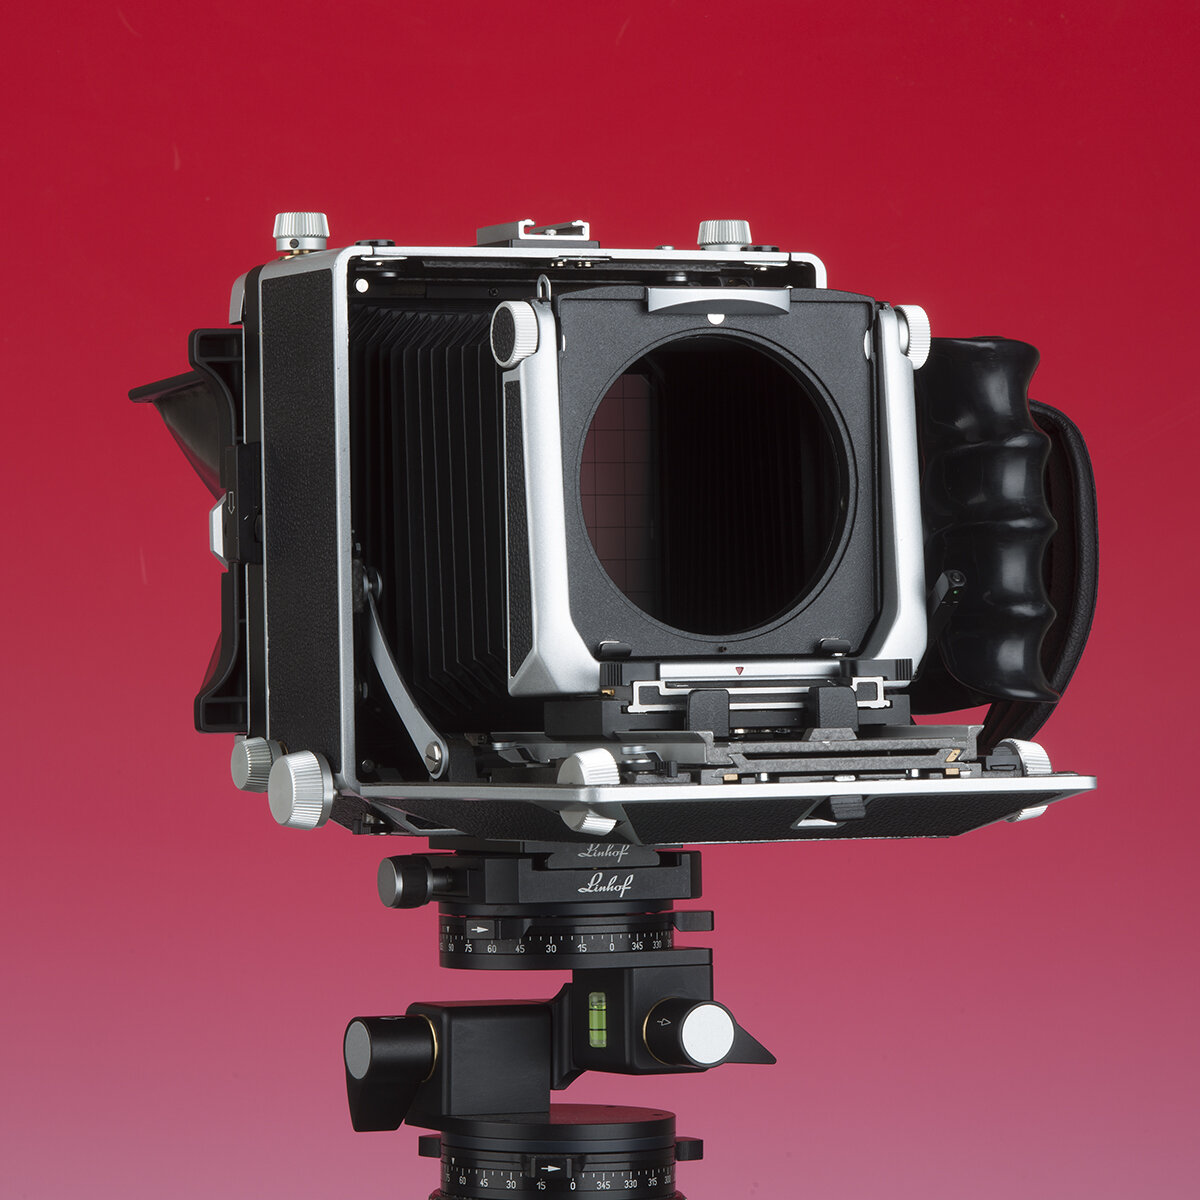 Arca-Swiss Linhof lens board For Arca Swiss 4x5 Camera Photo Accessories New 